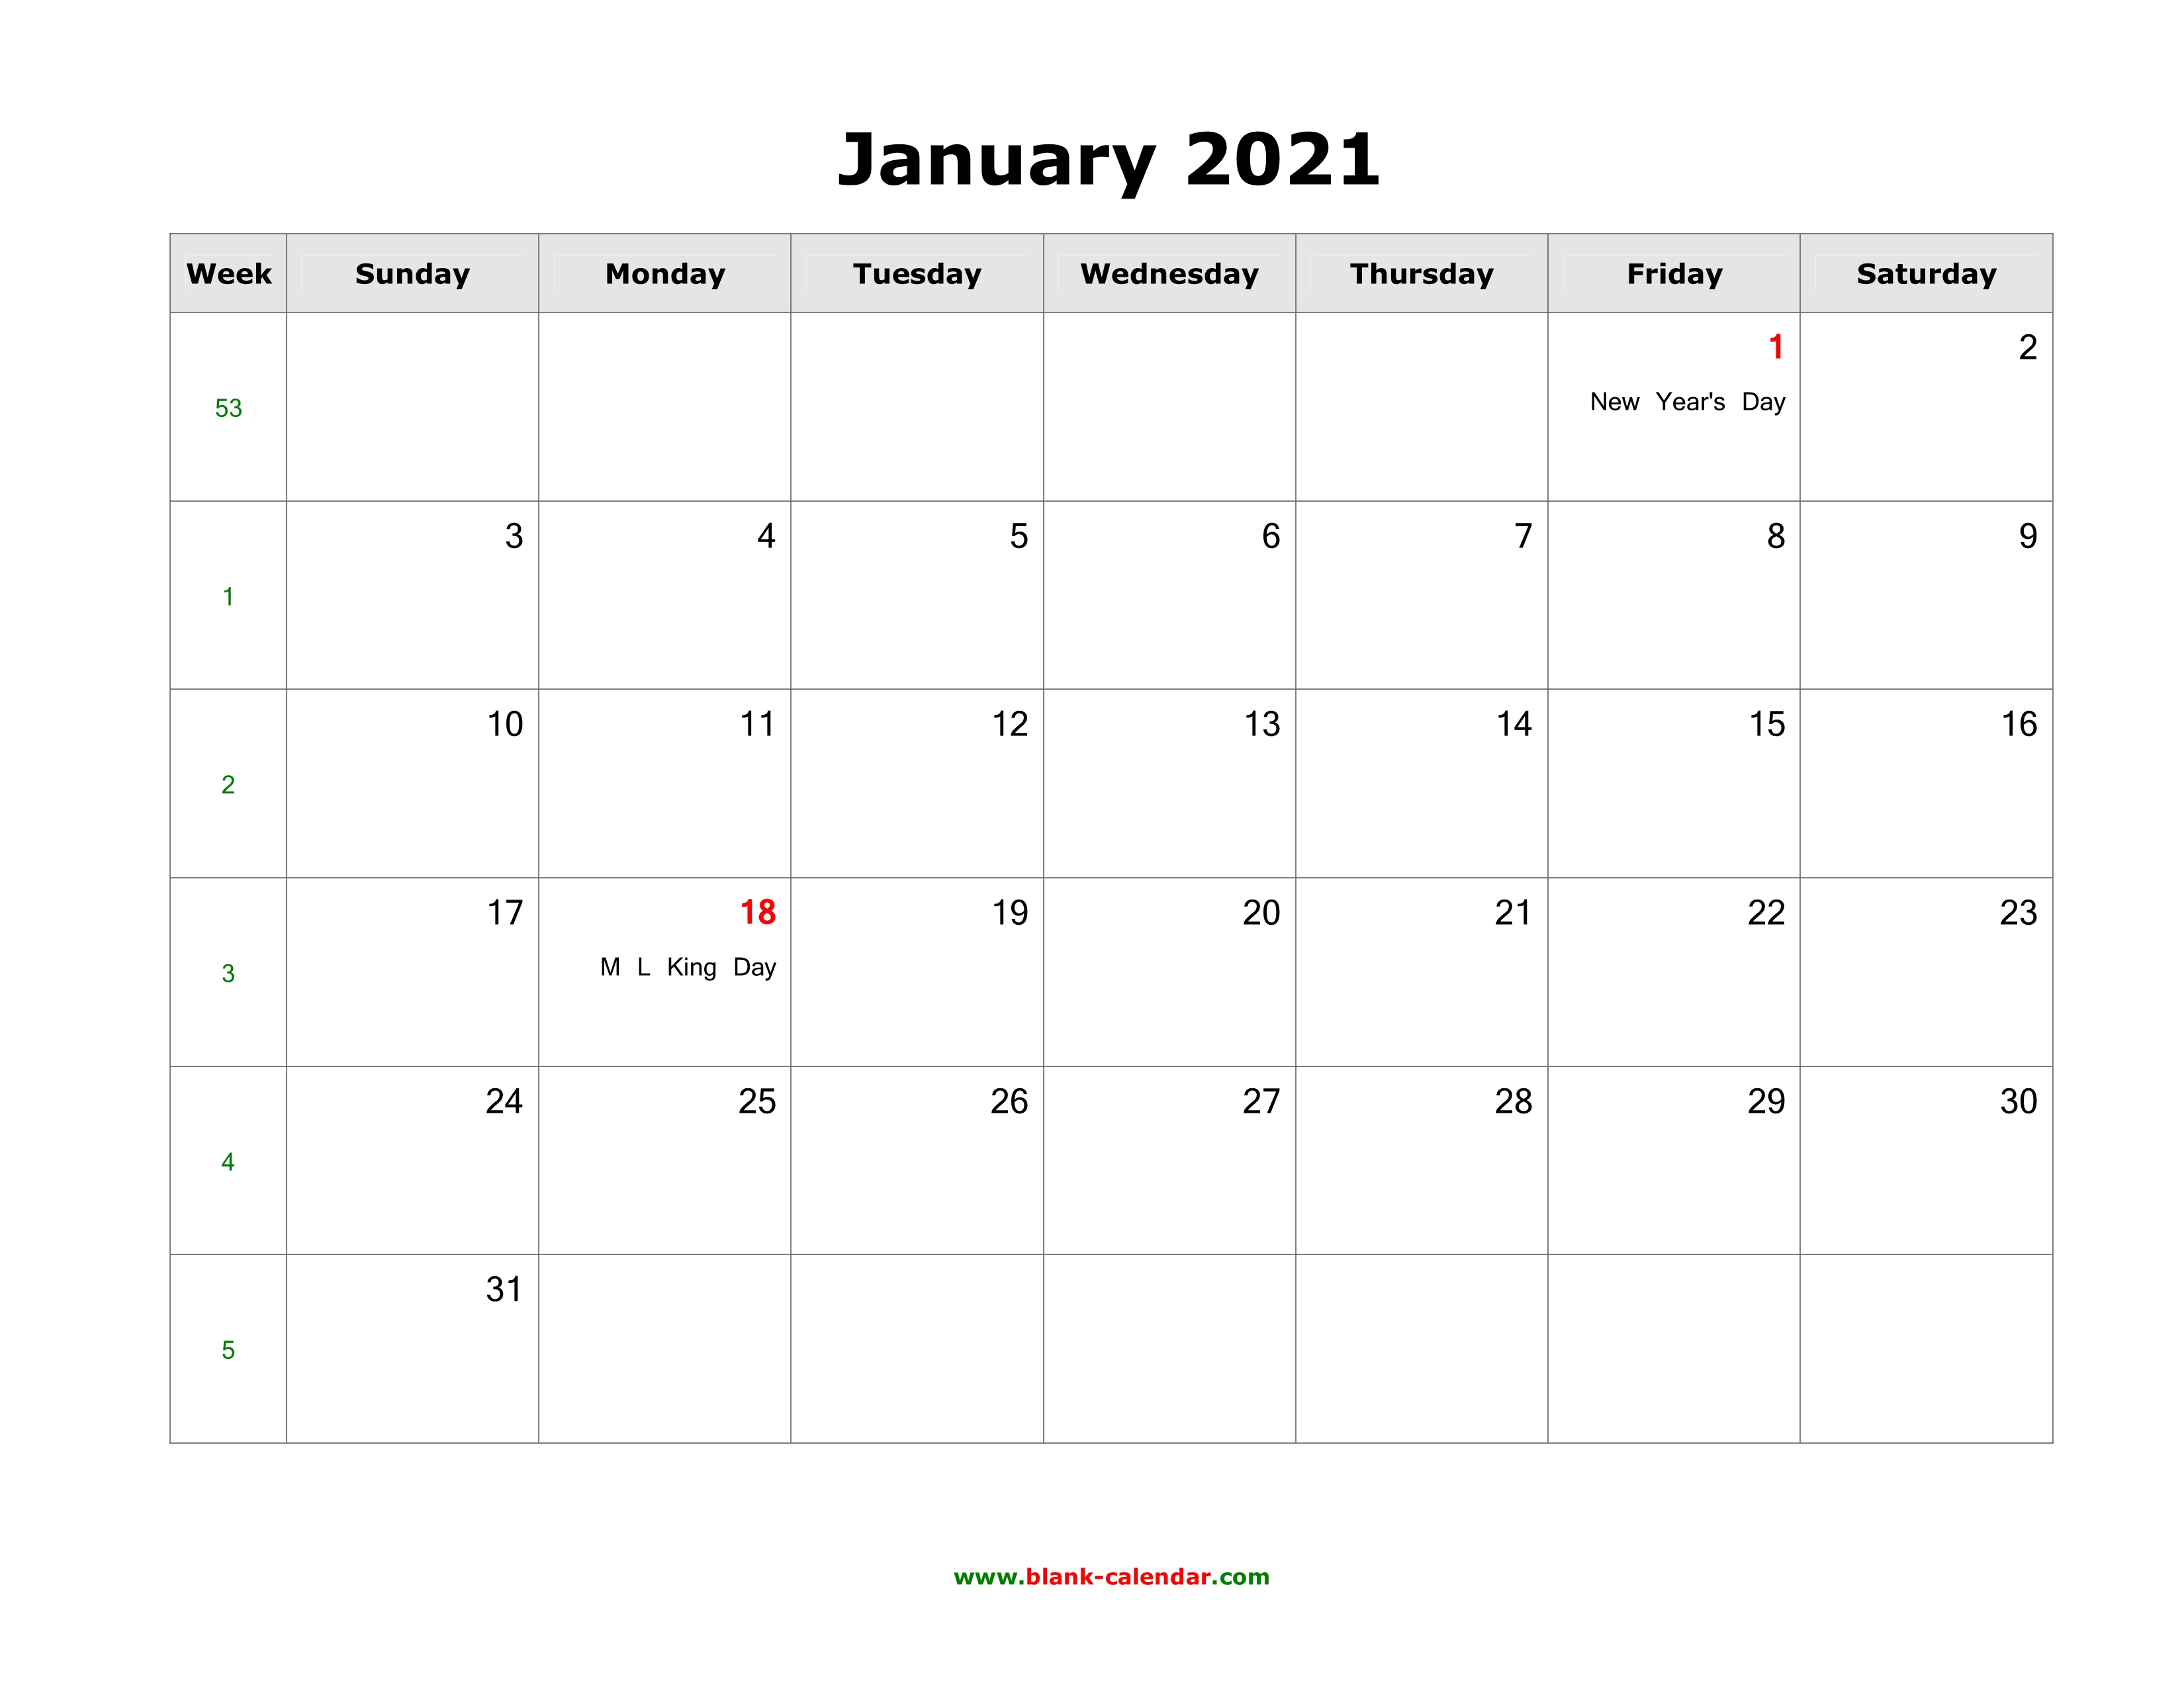 January 2021 Blank Calendar Free Download Calendar Templates